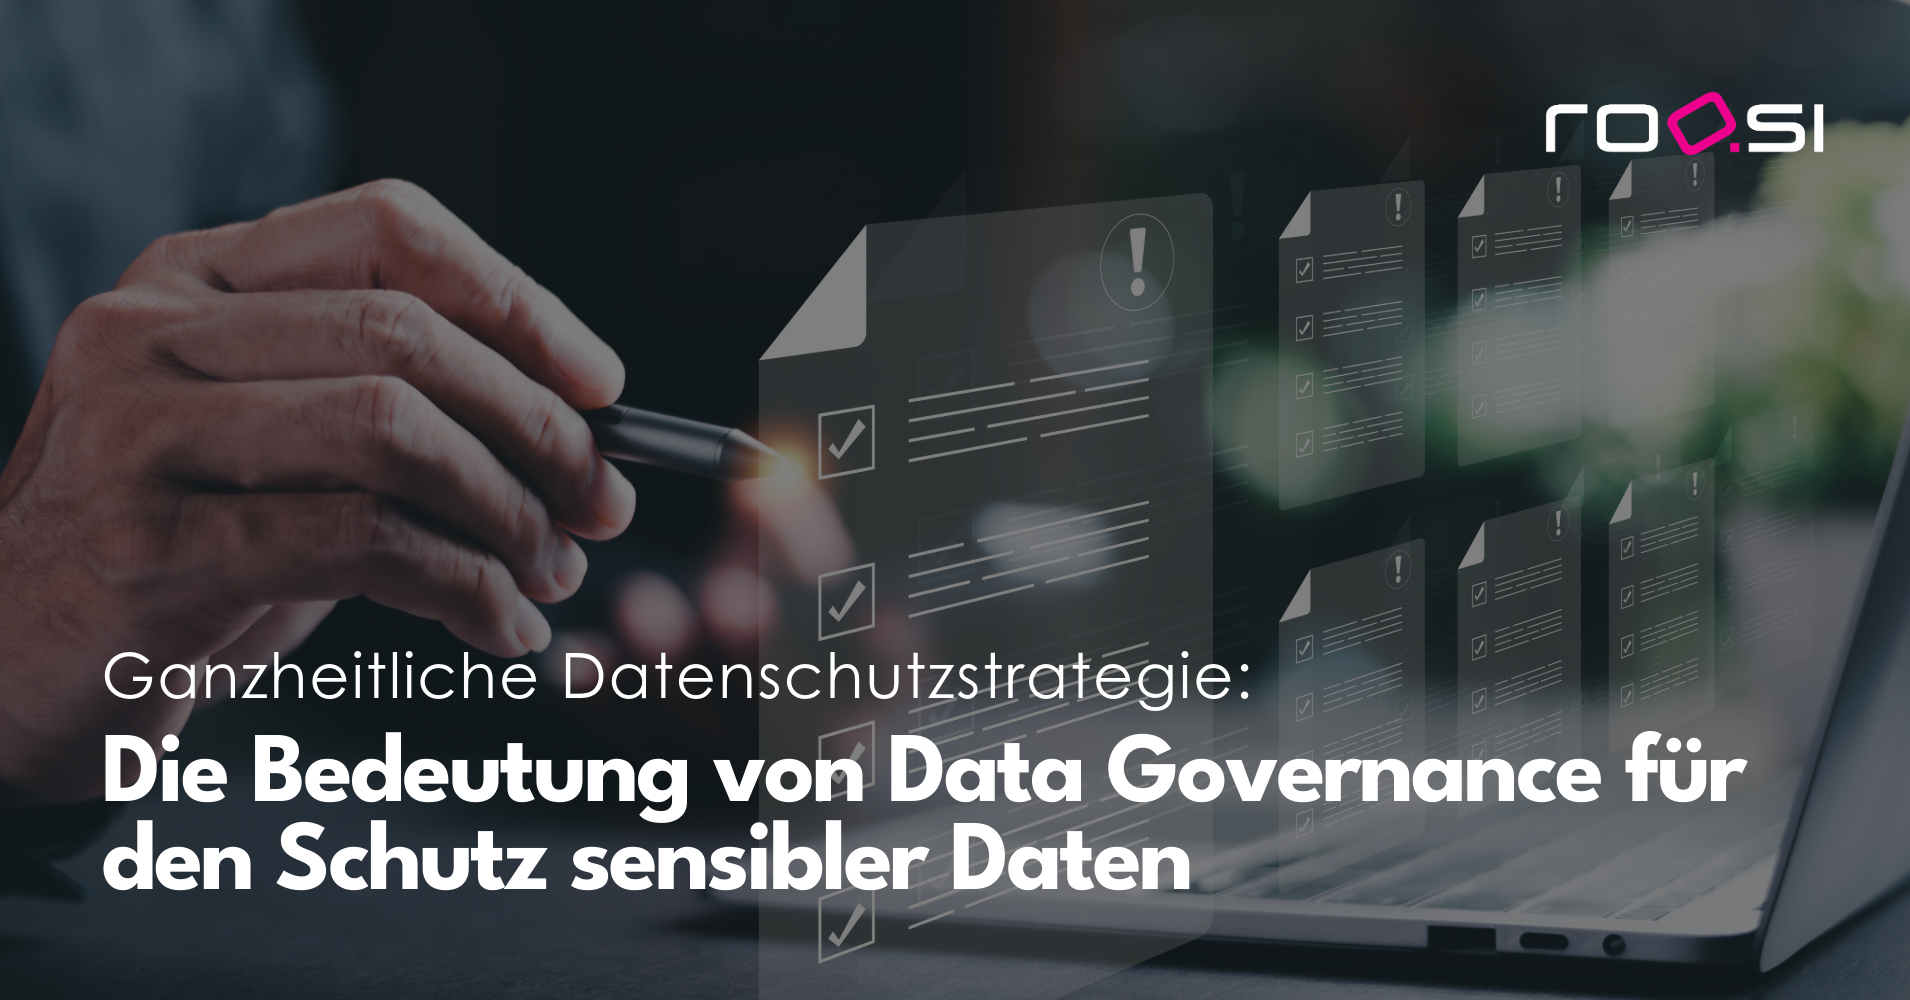 roosi_blog_data_governance_datenschutz_sensible_daten